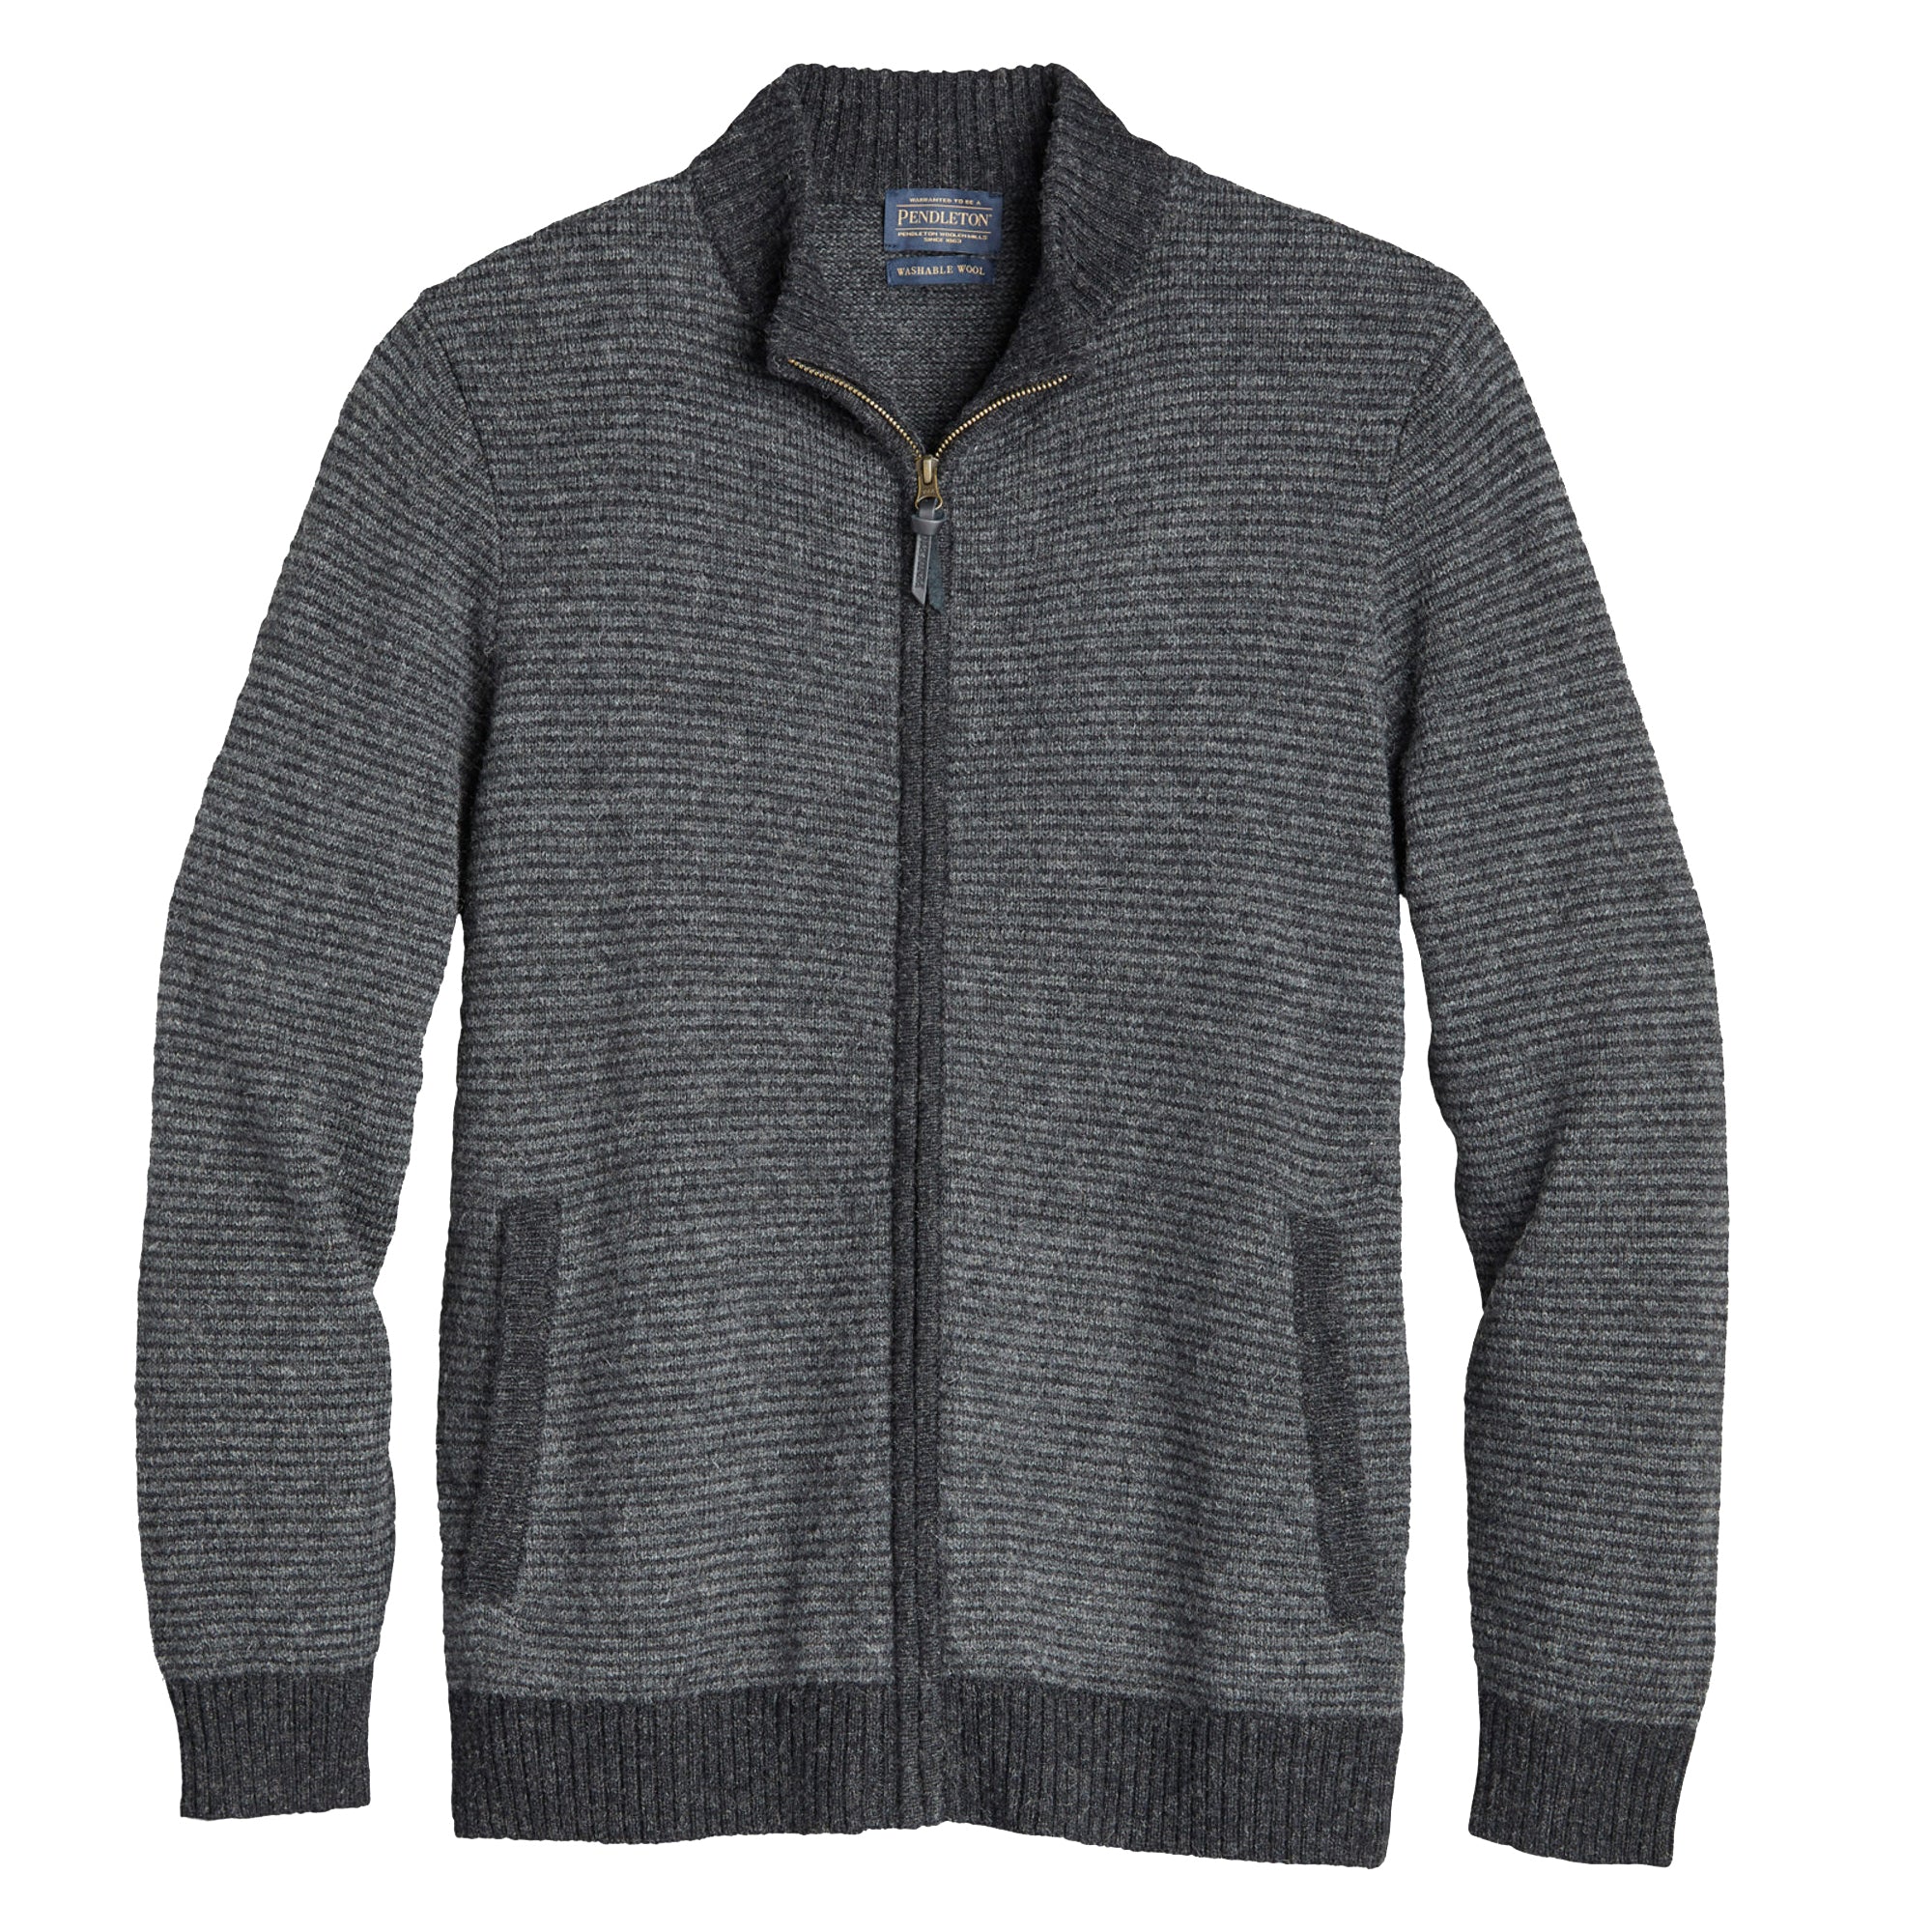 Pendleton Shetland Wool Full Zip Sweater in Charcoal/Black